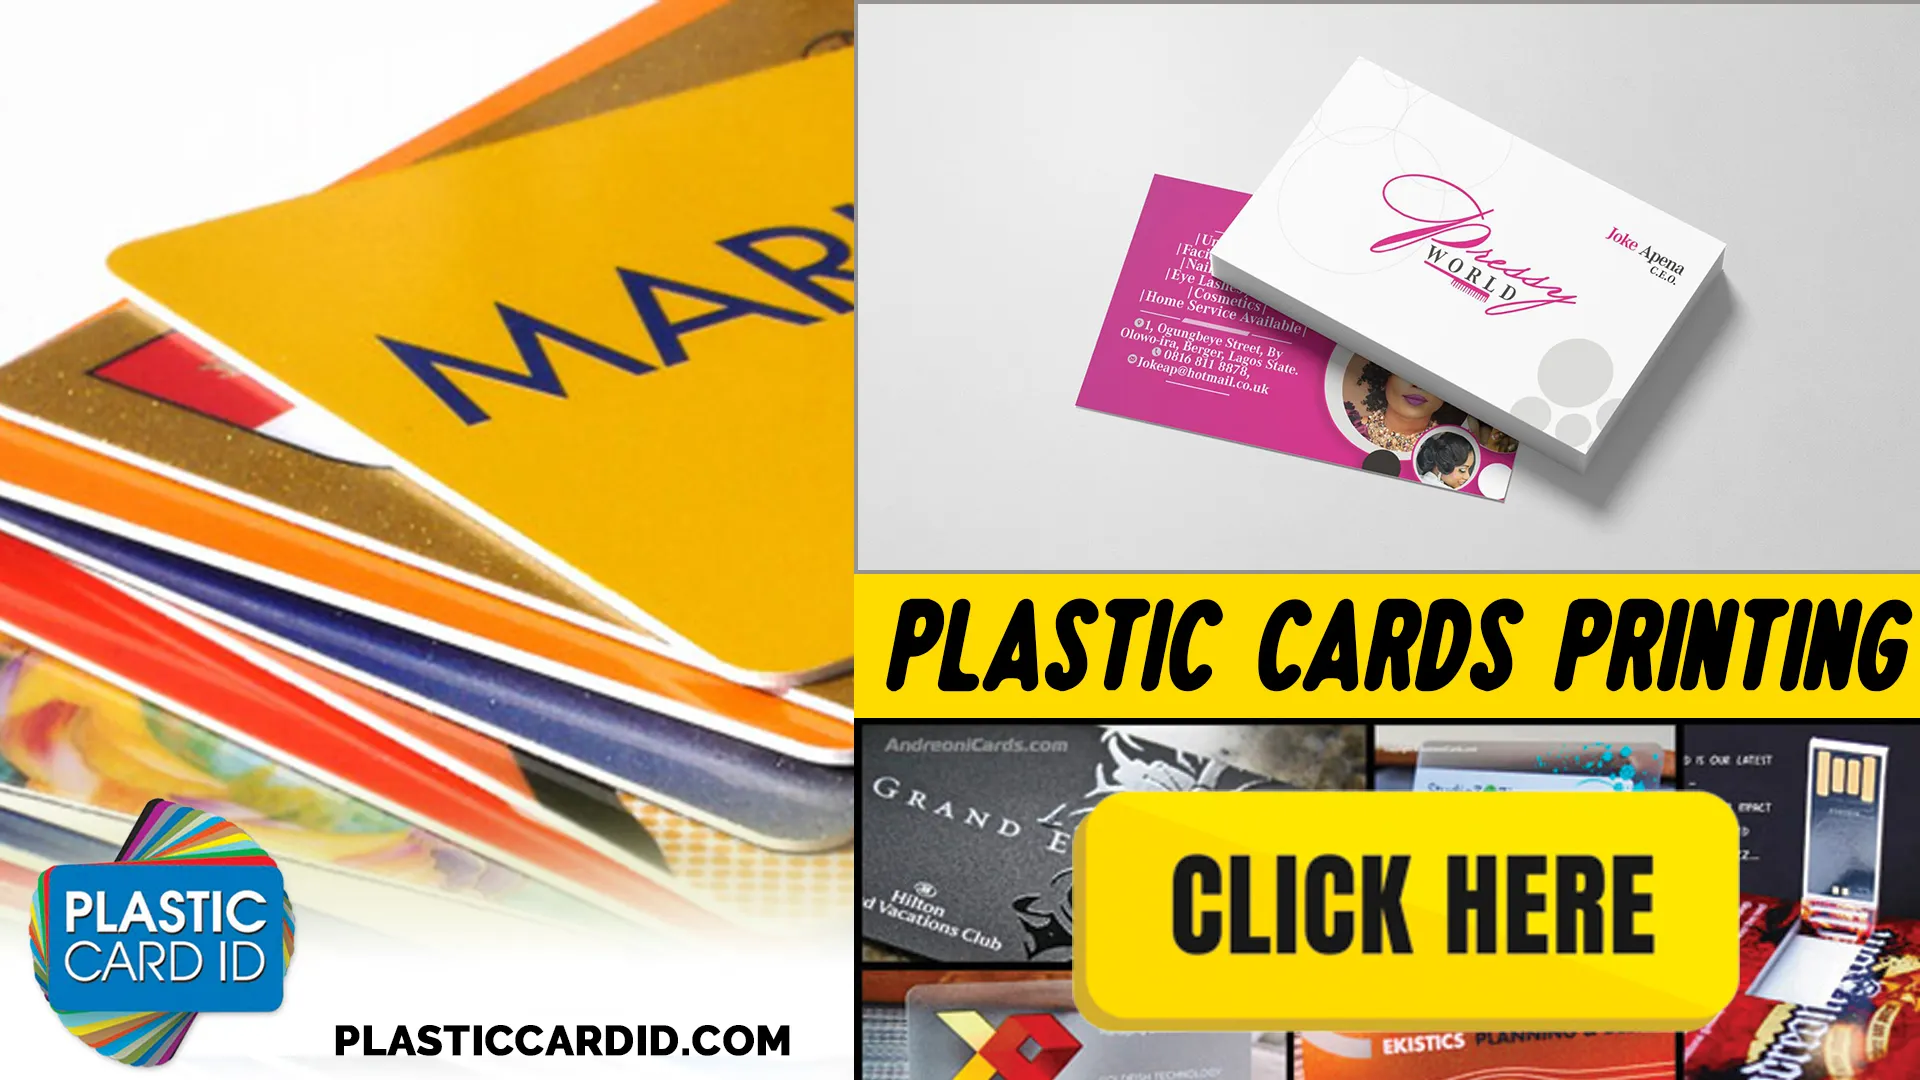 Plastic Card ID
: A True Partner in Print